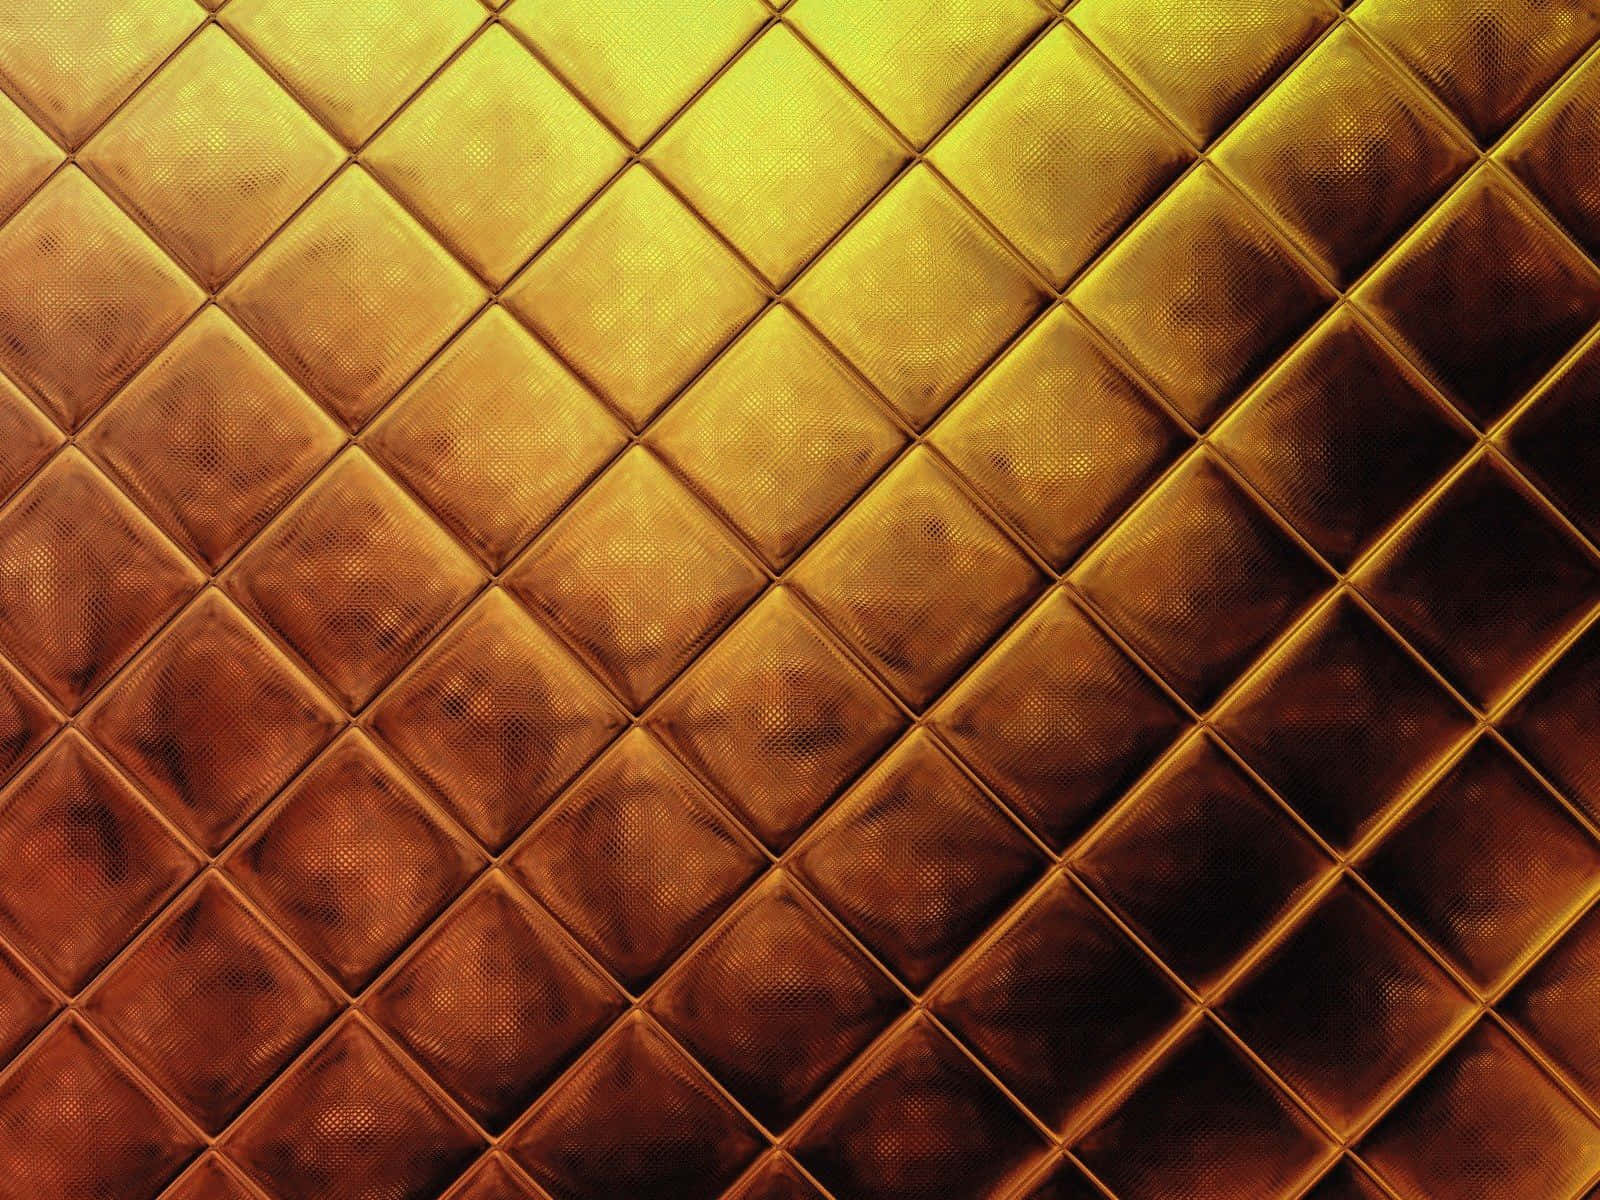 Enbaggrund I Guld Og Gul Farve Med Et Diamantmønster. Wallpaper